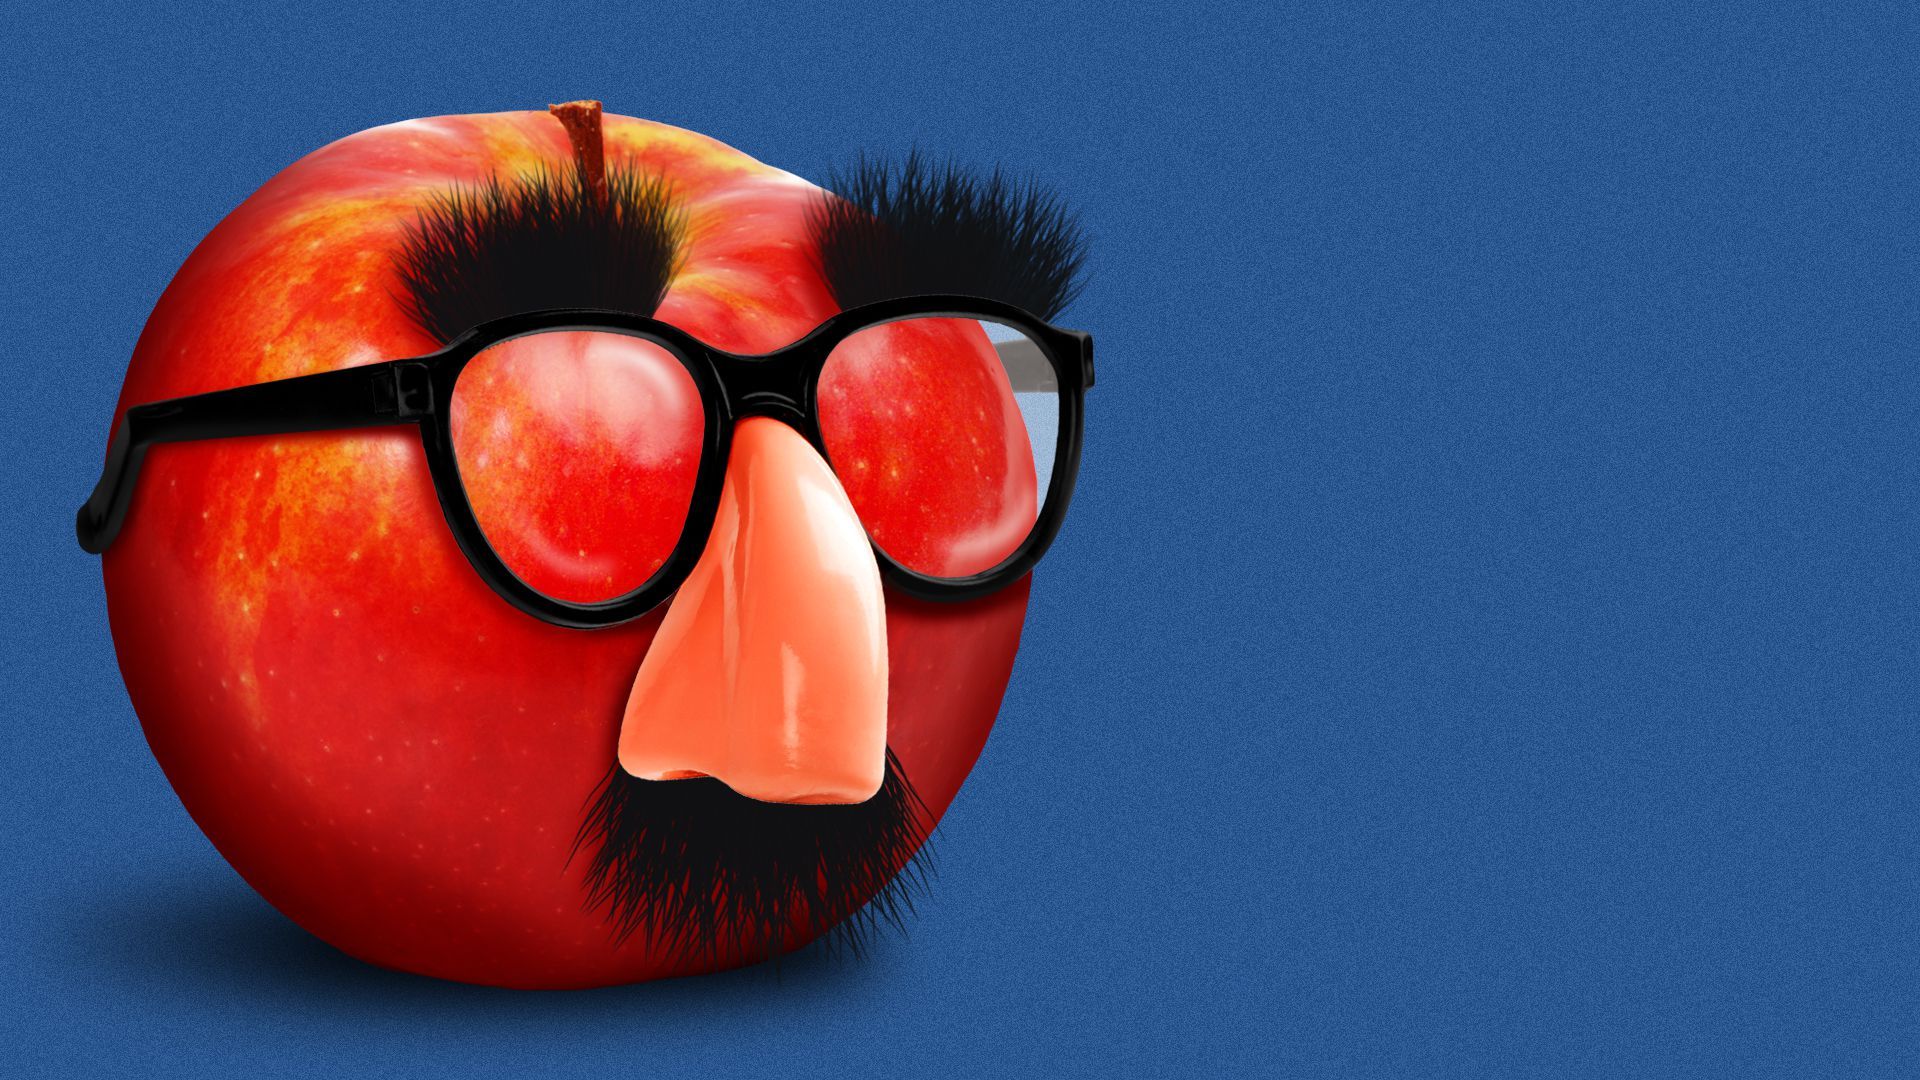 Illustration of an apple wearing a joke Groucho Mark glasses